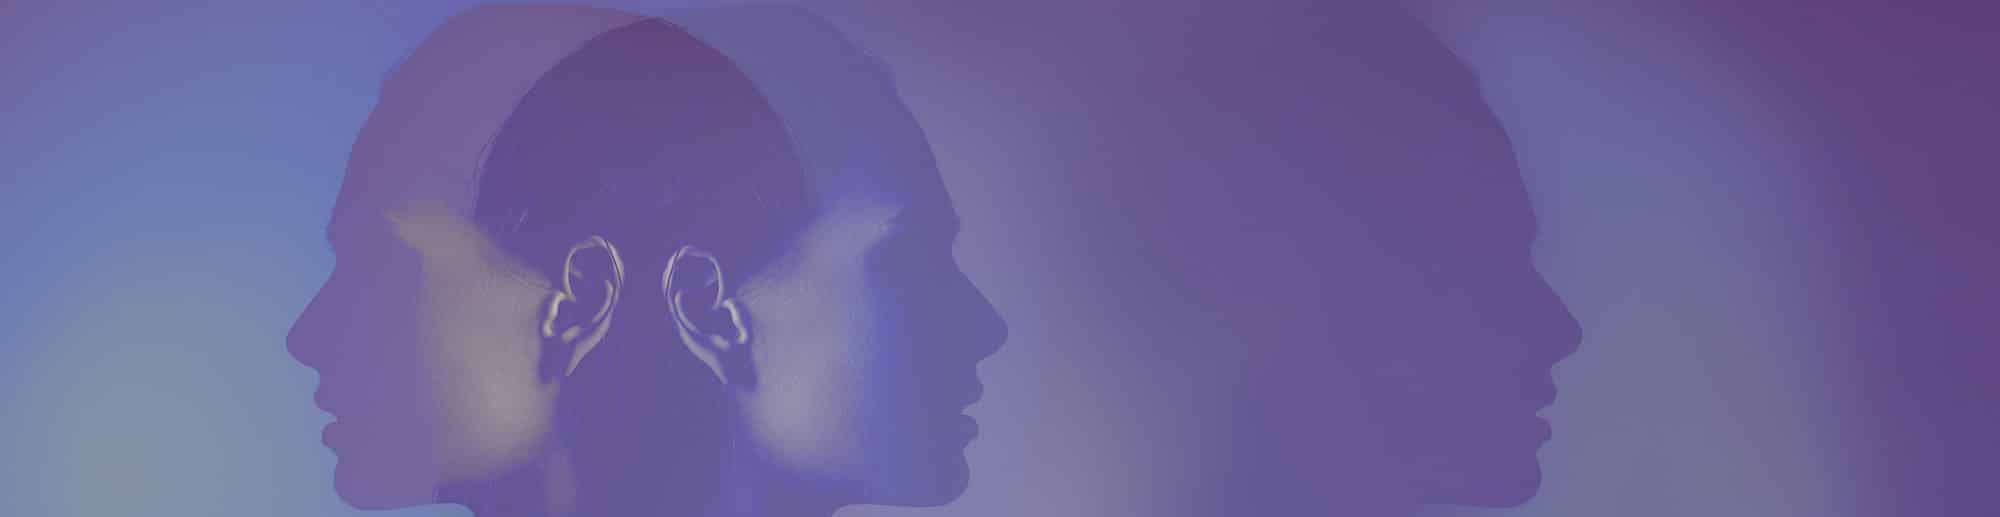 Purple hued profile of woman, shadowed 3 times 